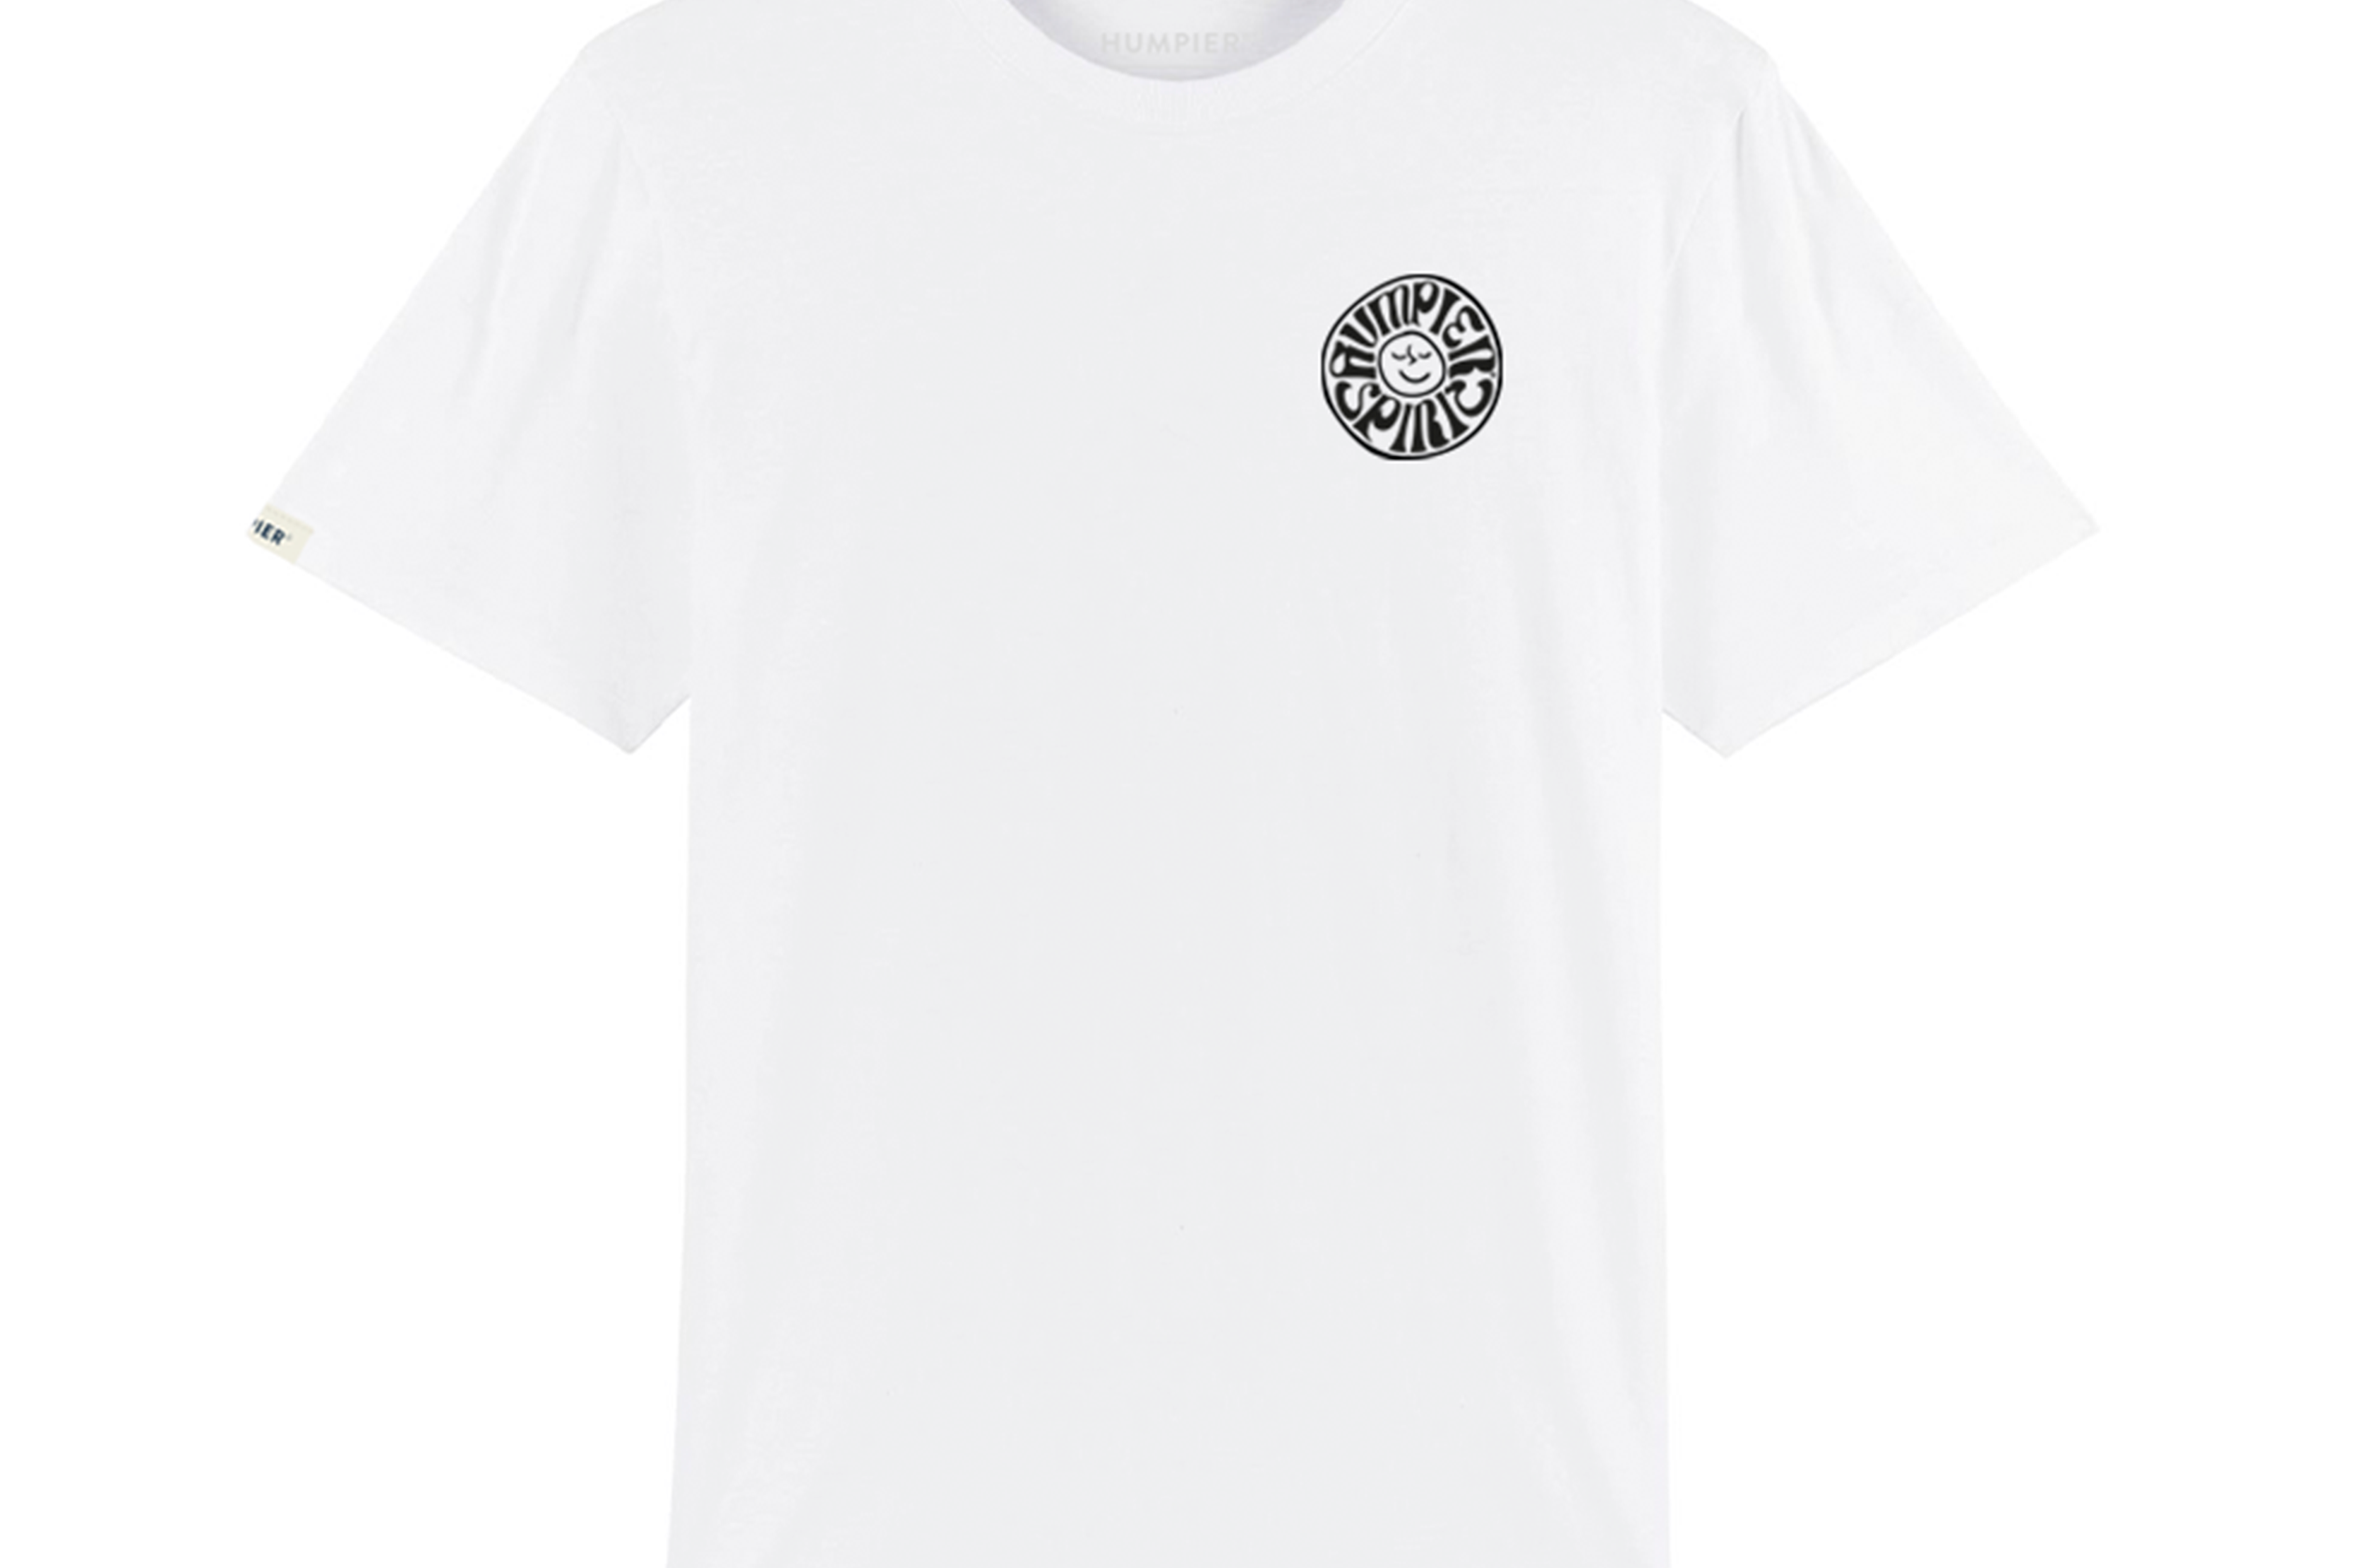 Camiseta manga corta Surf & Motors Humpier blanca